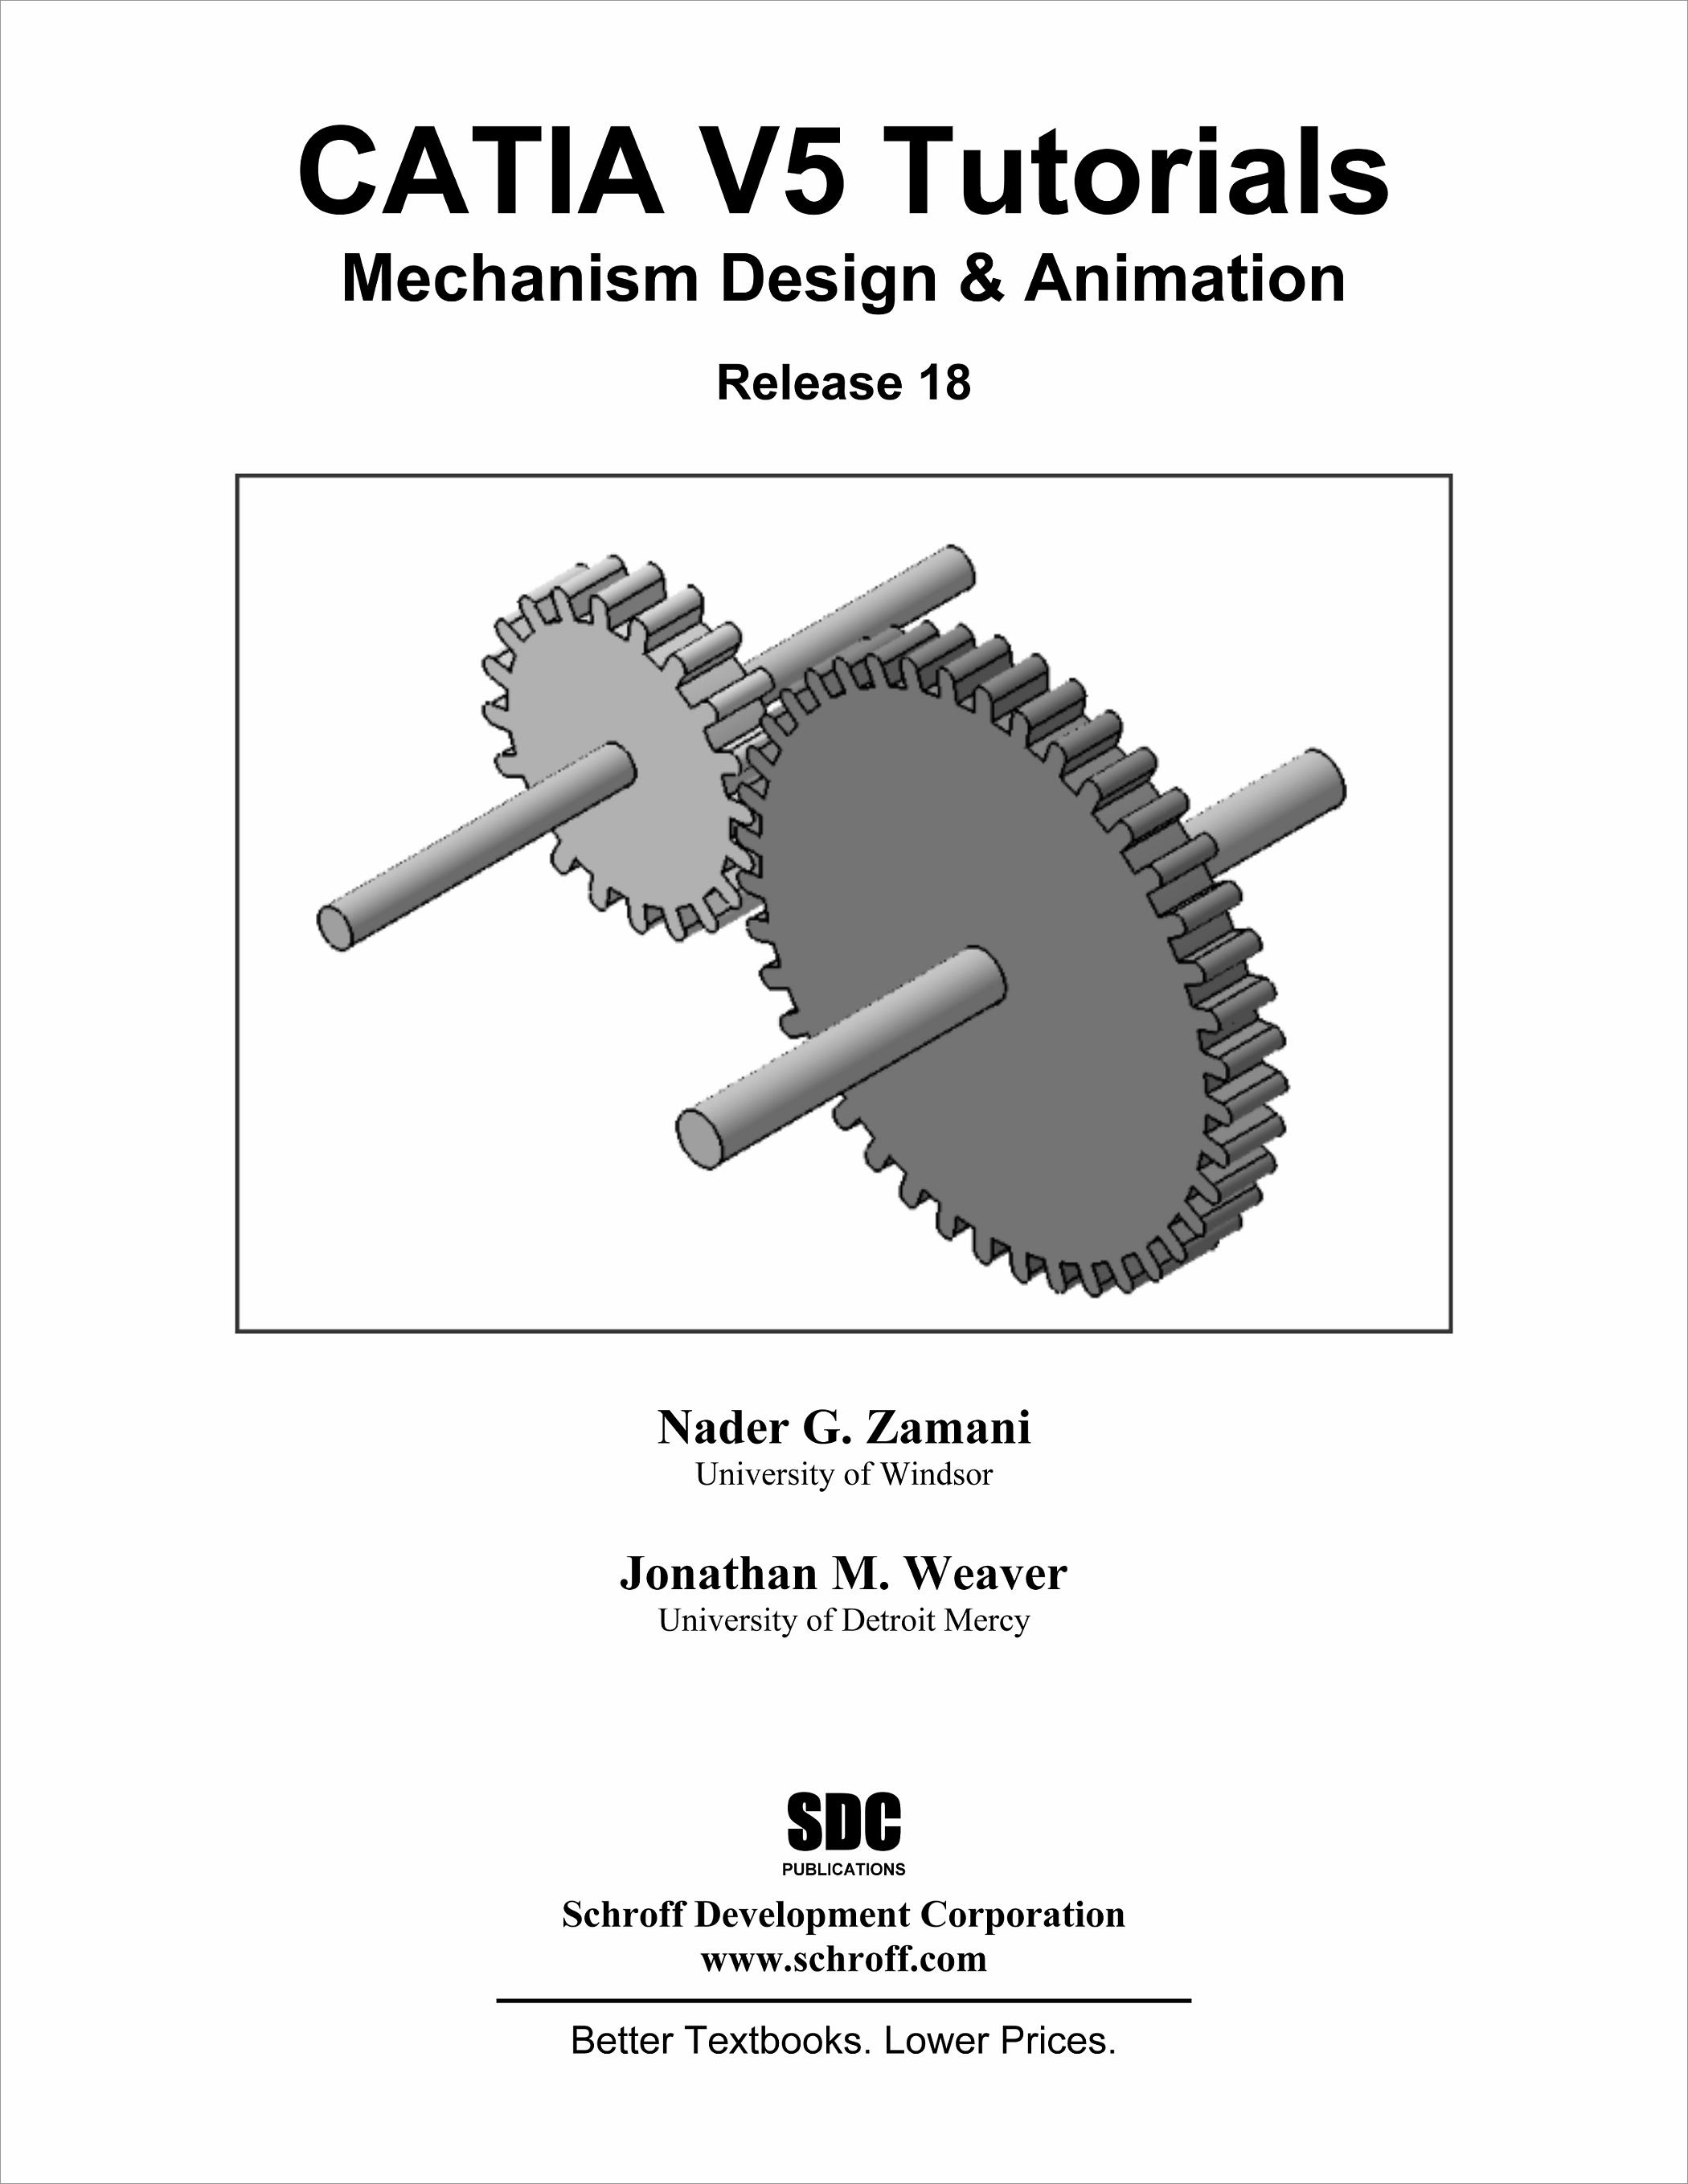 CATIA V5 Tutorials Mechanism Design & Animation Release 18, Book  9781585035090 - SDC Publications